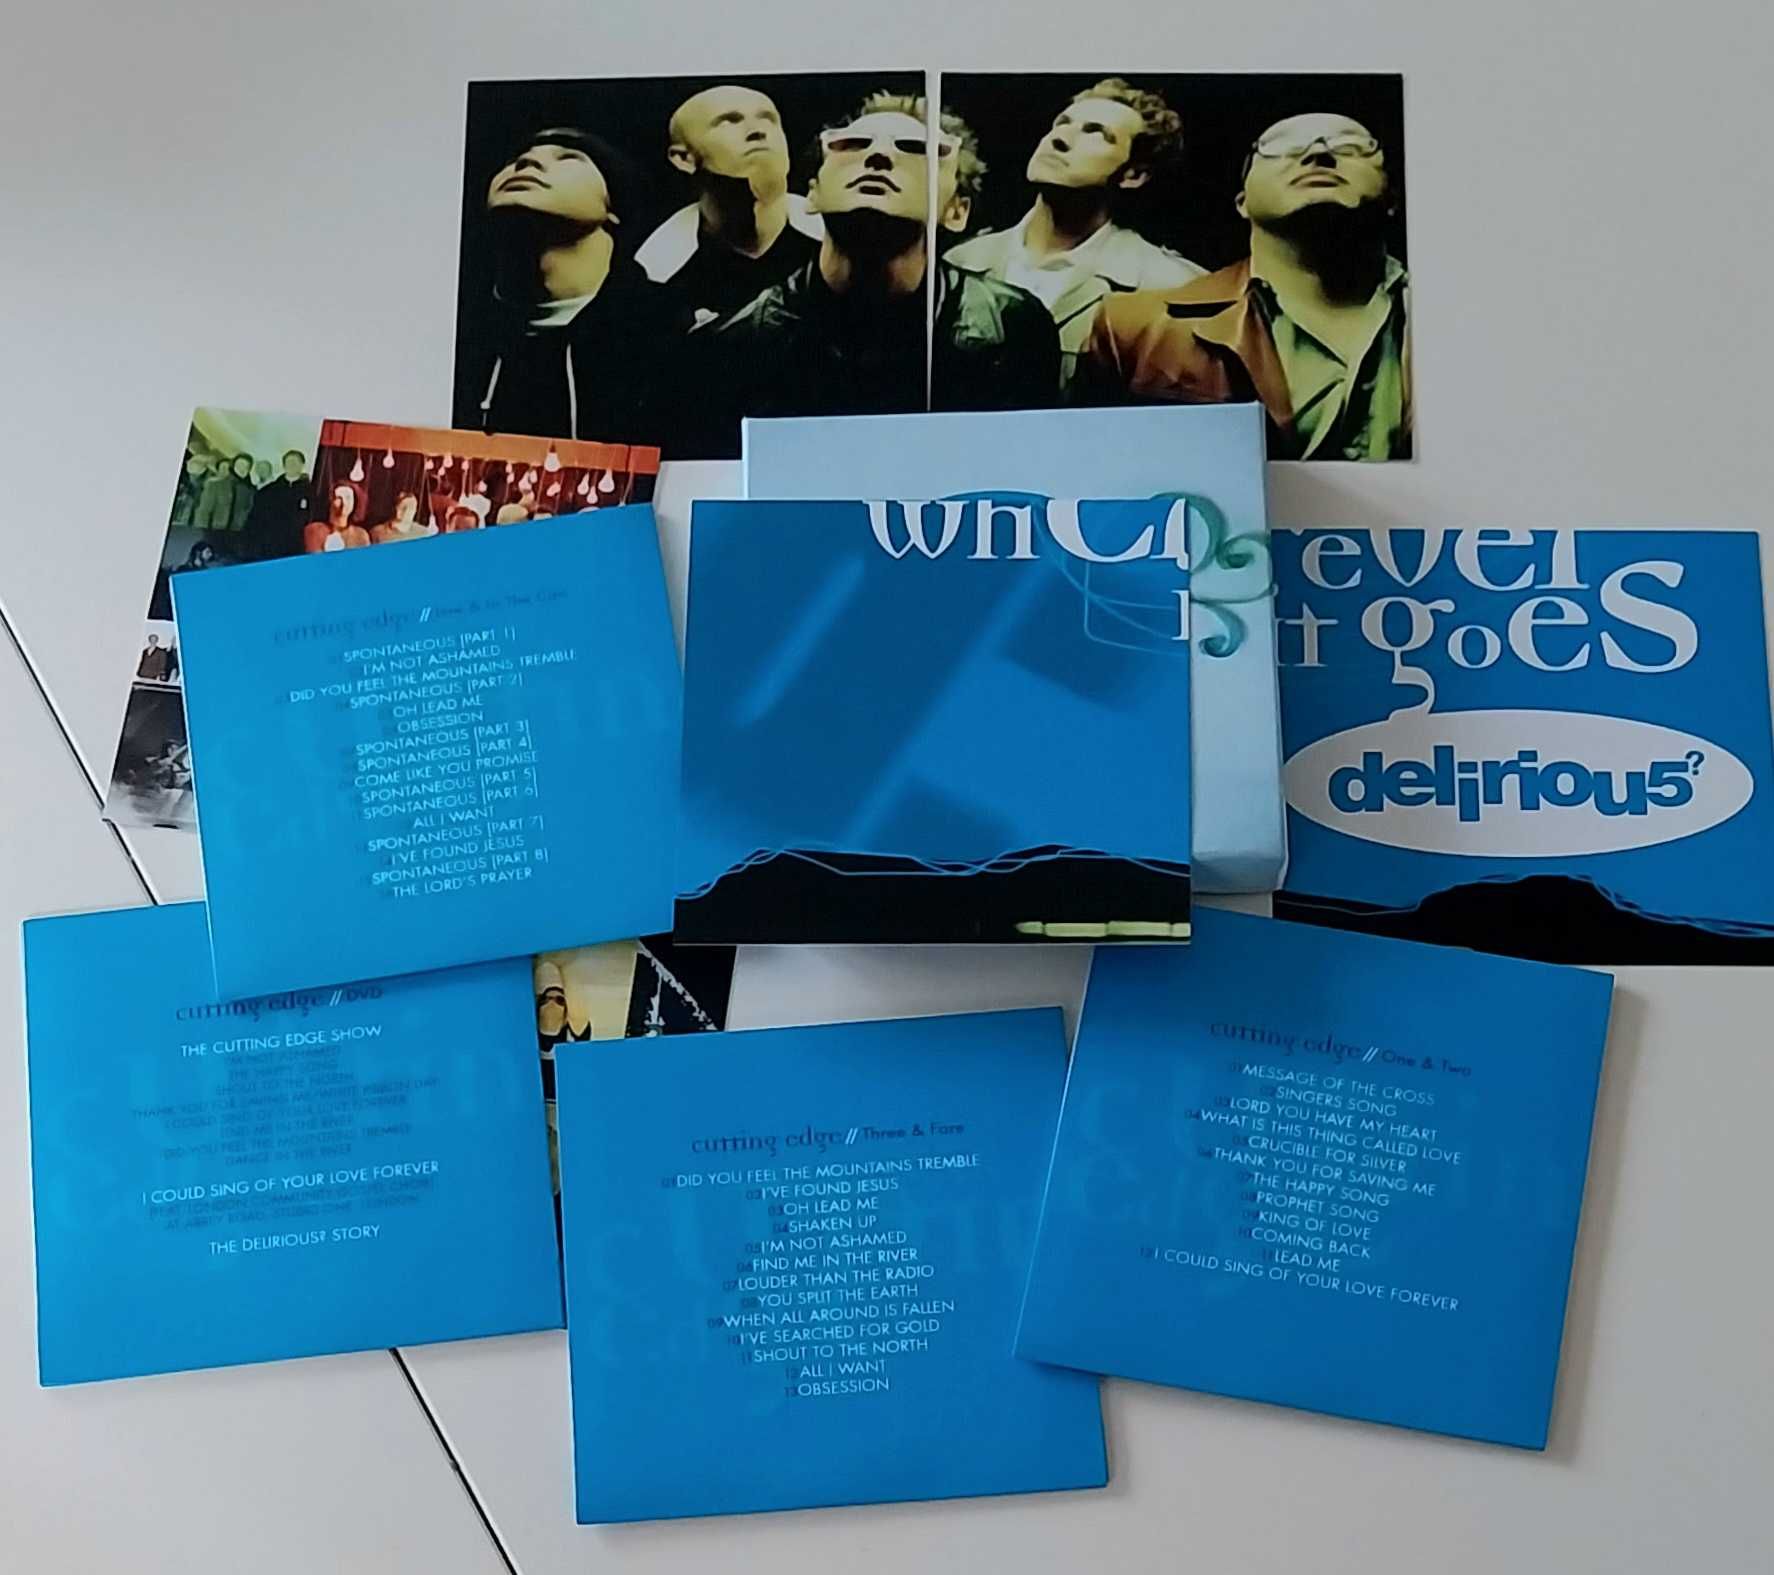 Delirious  - Cutting Edge Years 20 anniversary edition BOX SET 3CD DVD